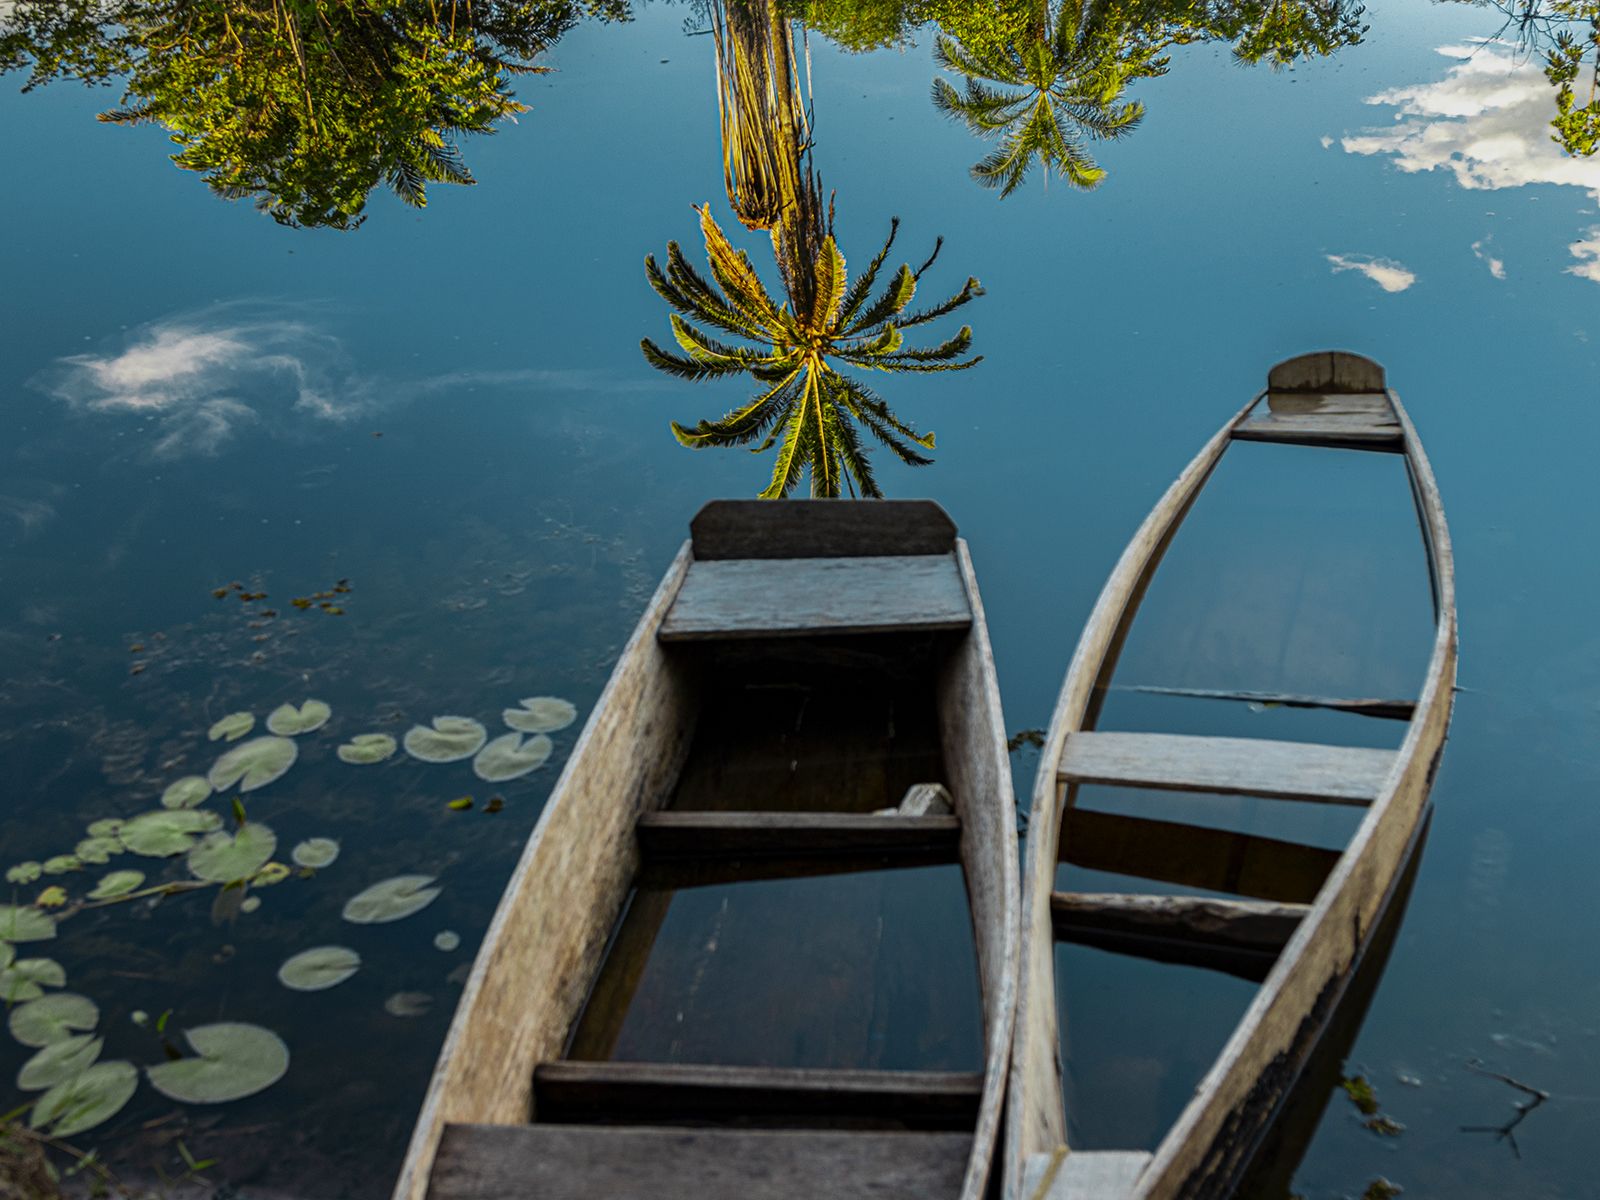 Reflections of the Marimbus